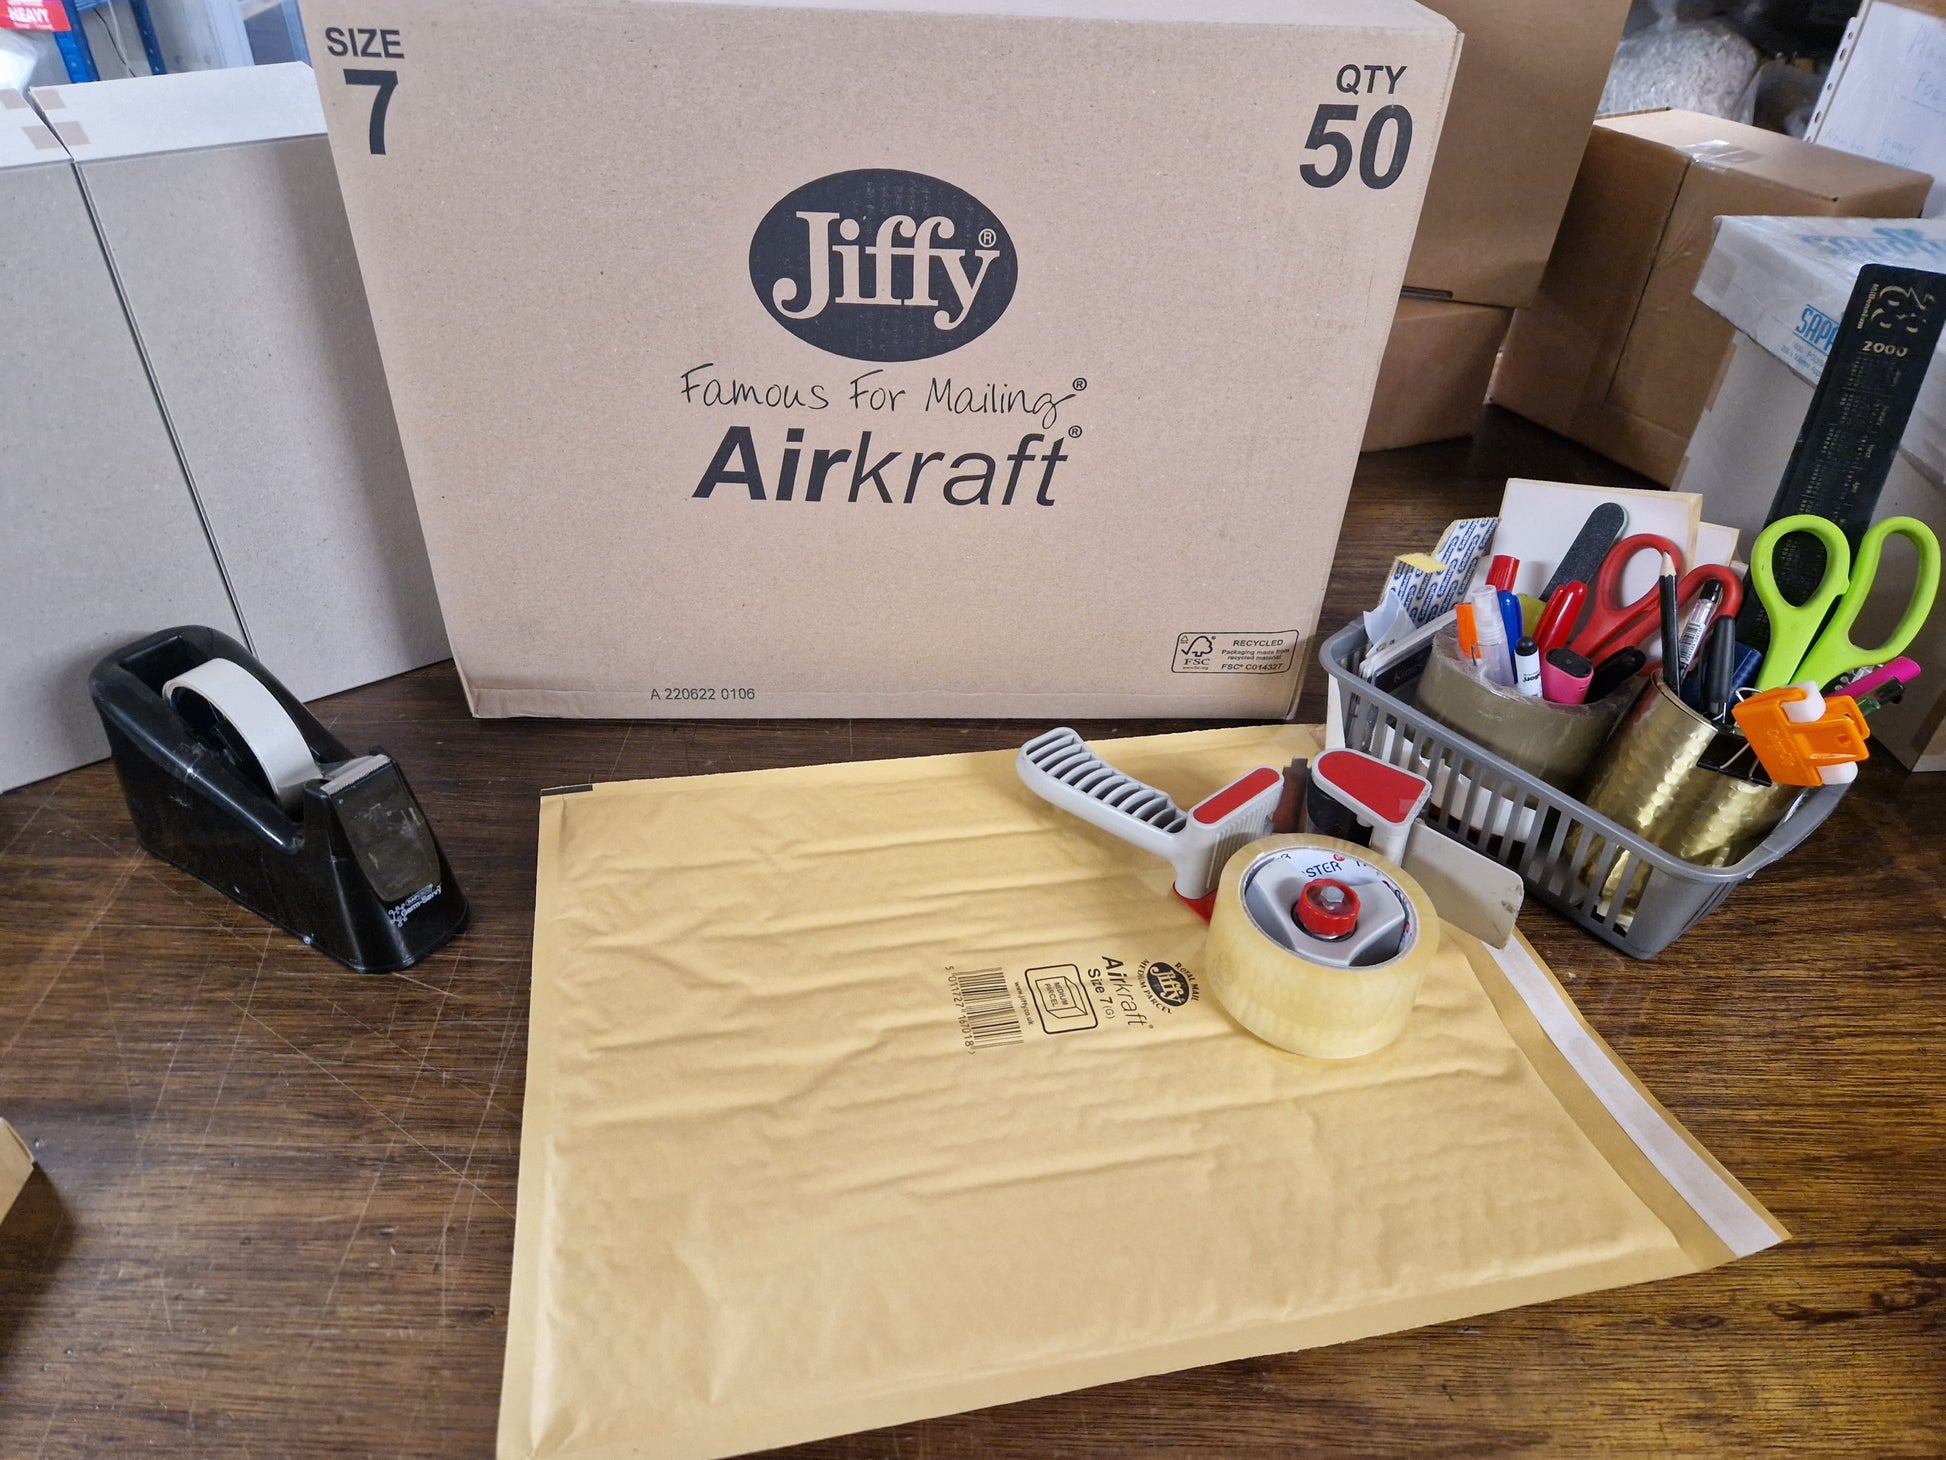 Box of Jiffy Airkraft JL7 from Jiffy Envelopes